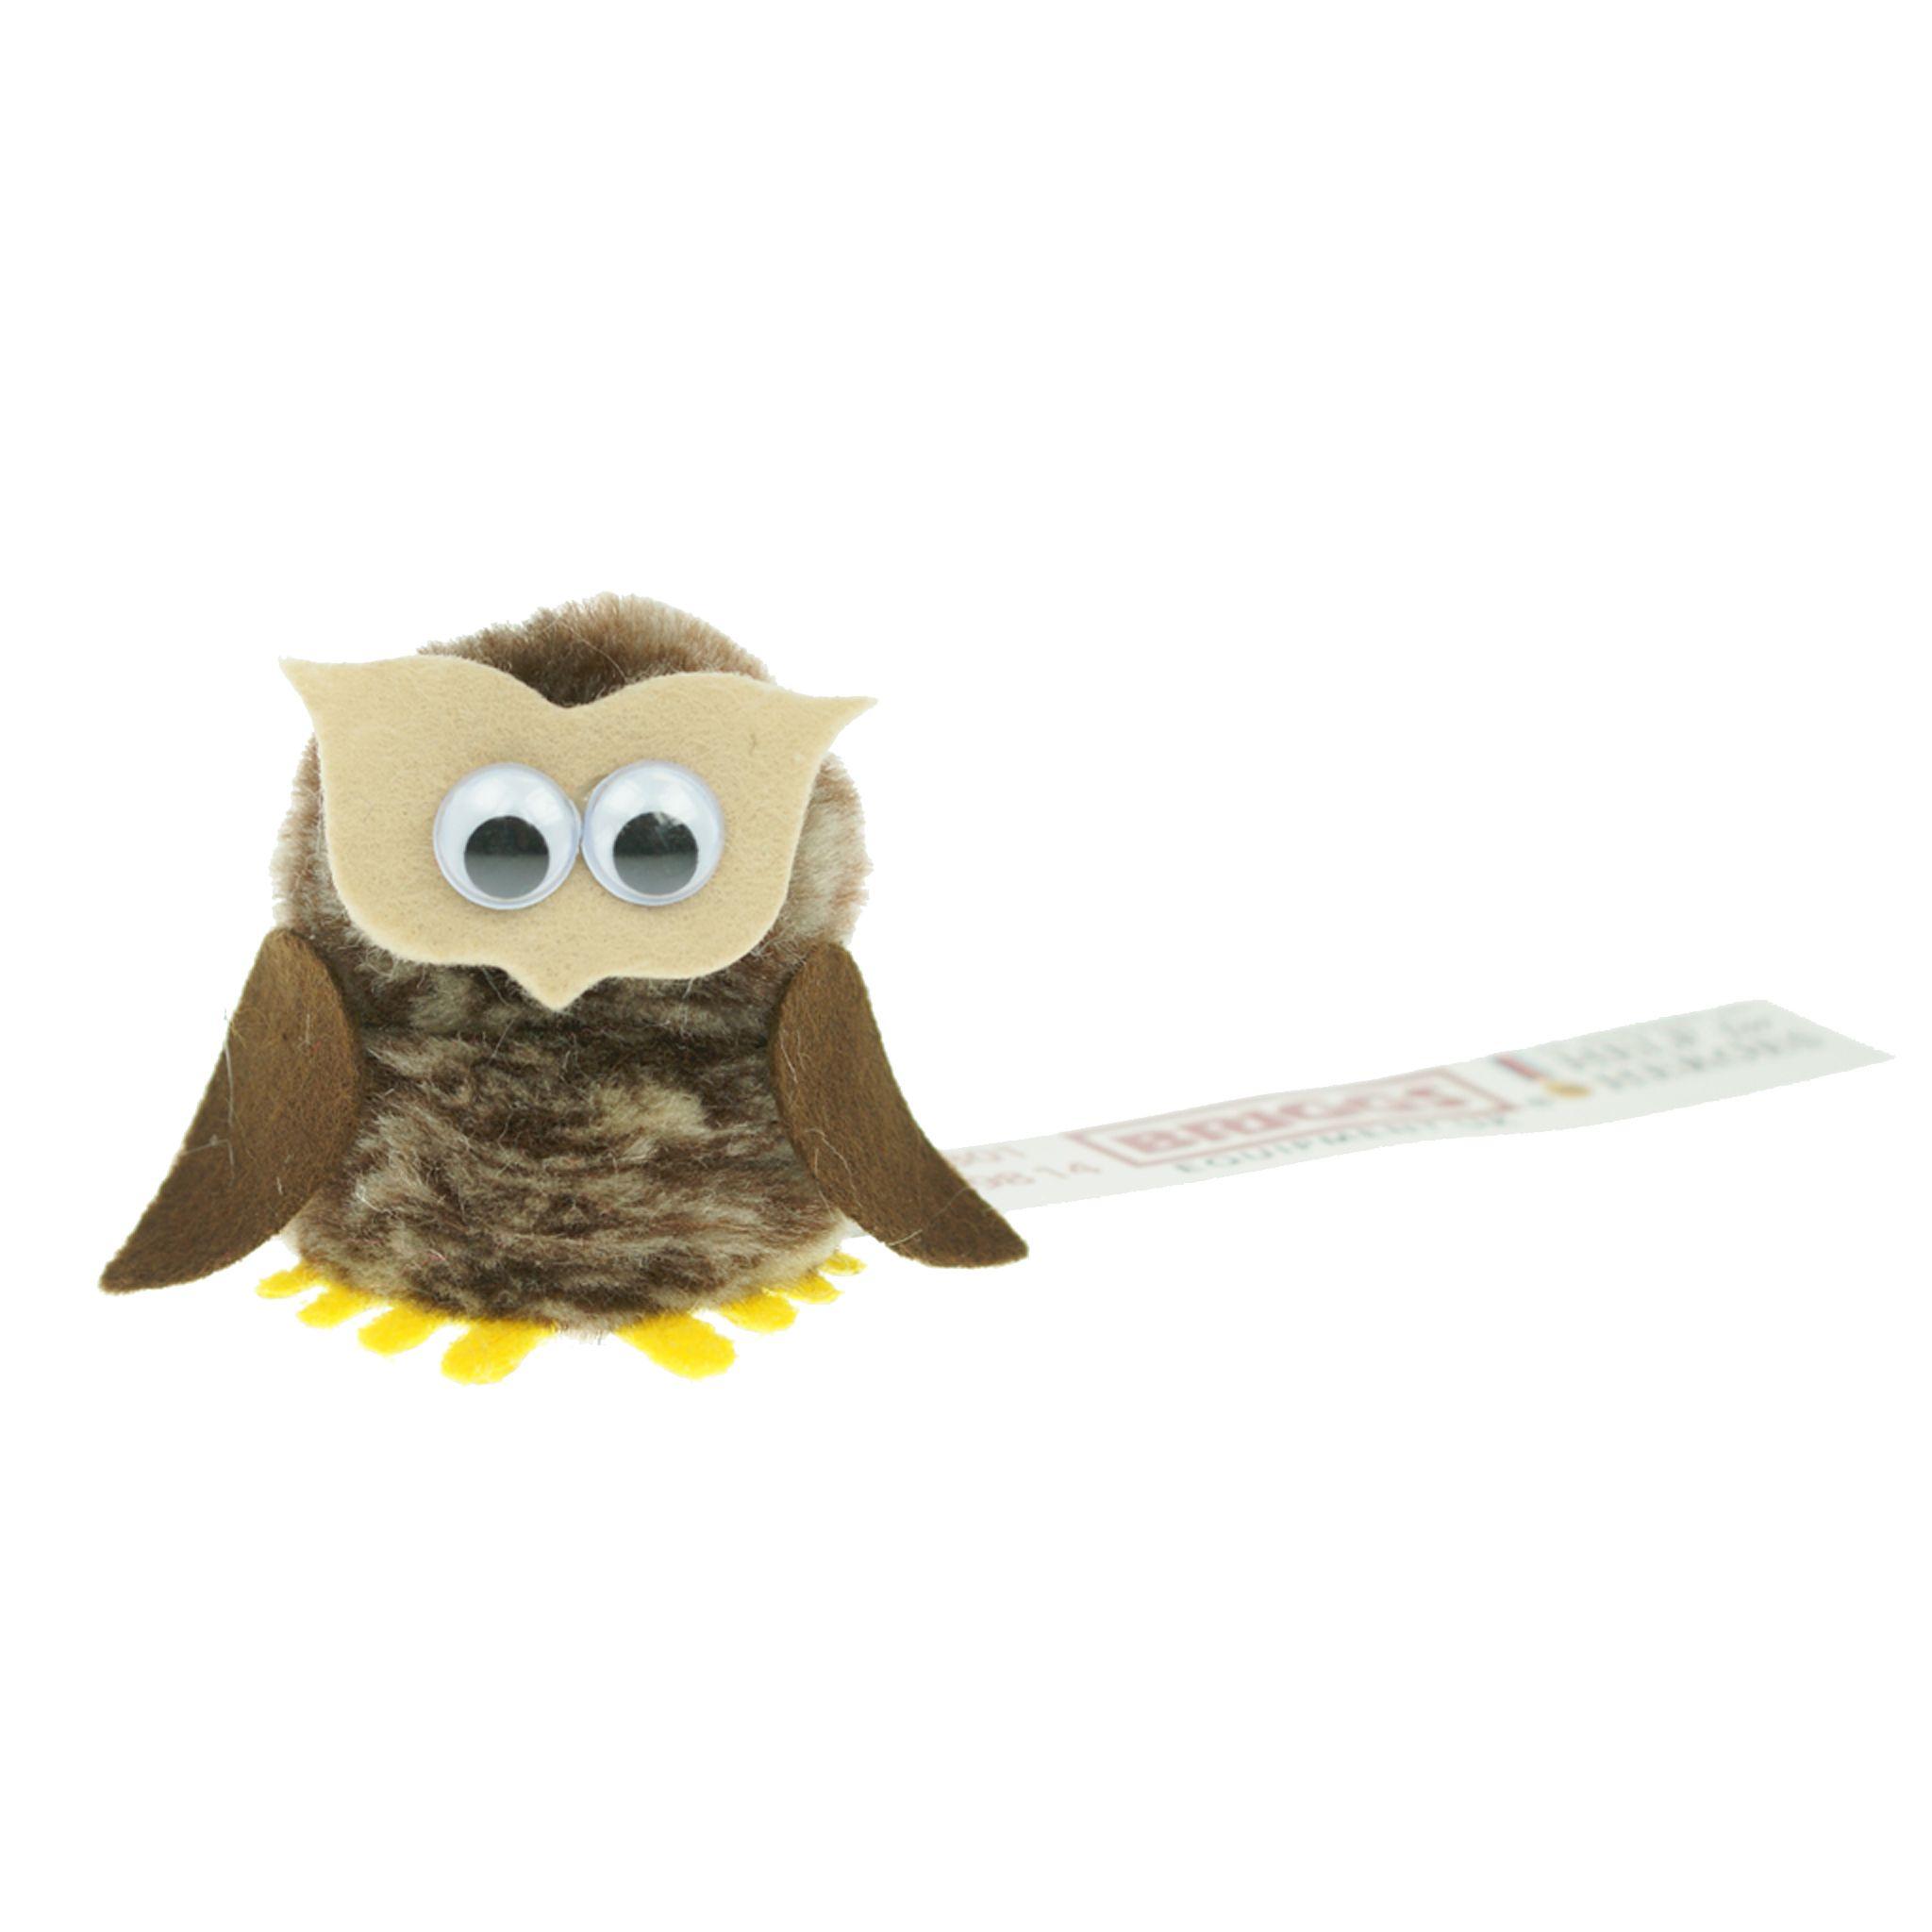 Owl Feet Logo - Animal Logo Bugs Owl - Buy Promotional Products UK | Corporate Gifts ...